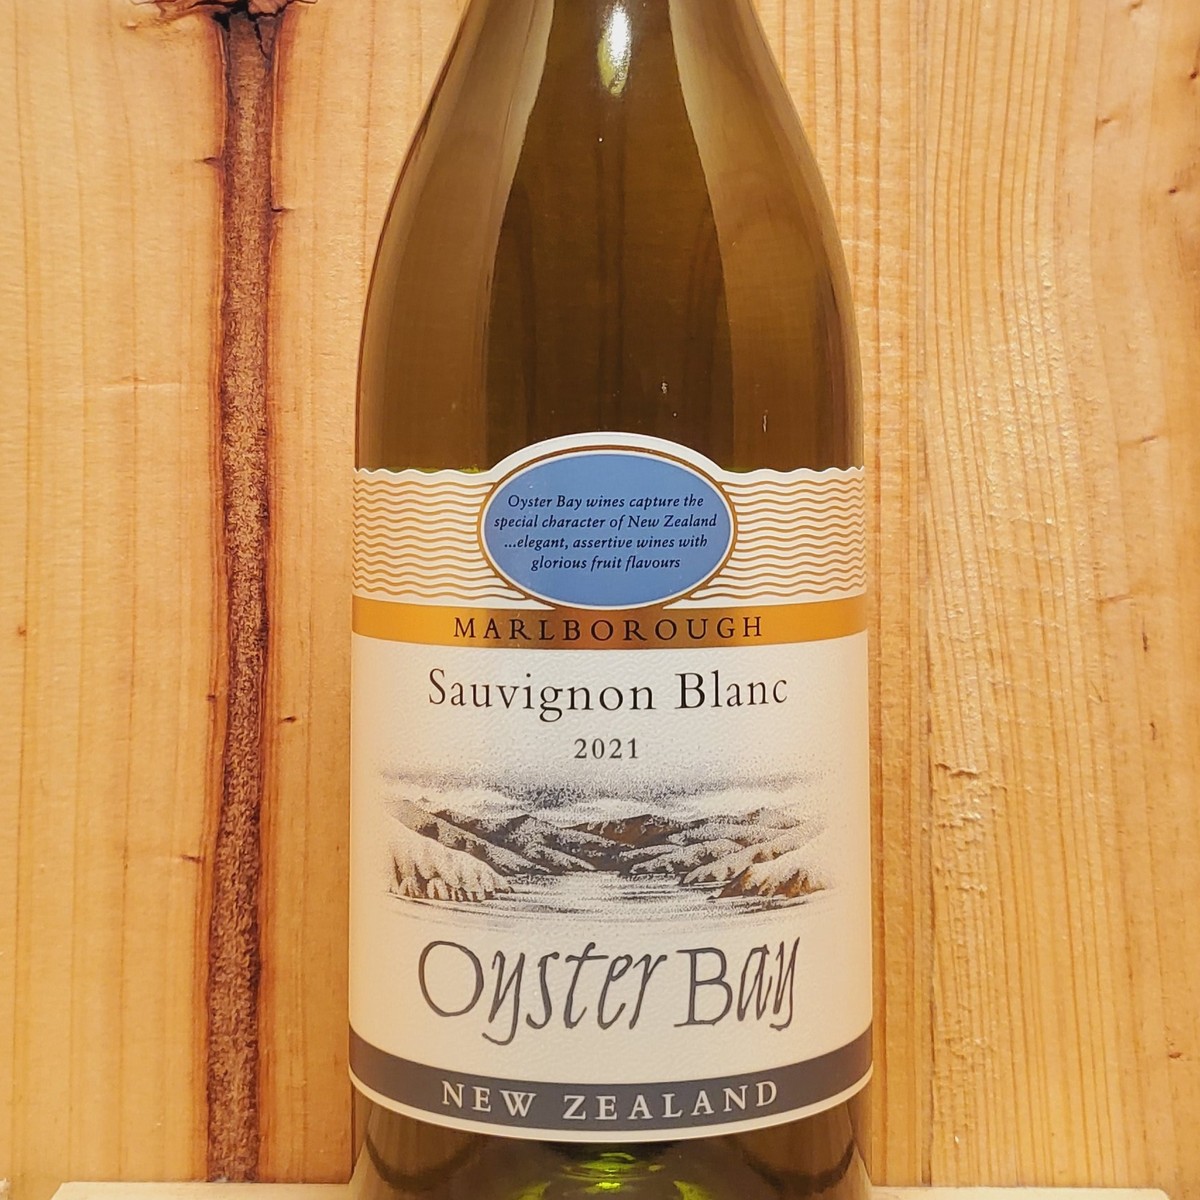 Oyster Bay Wines - Oyster Bay Pinot Noir Marlborough 2019 750ML